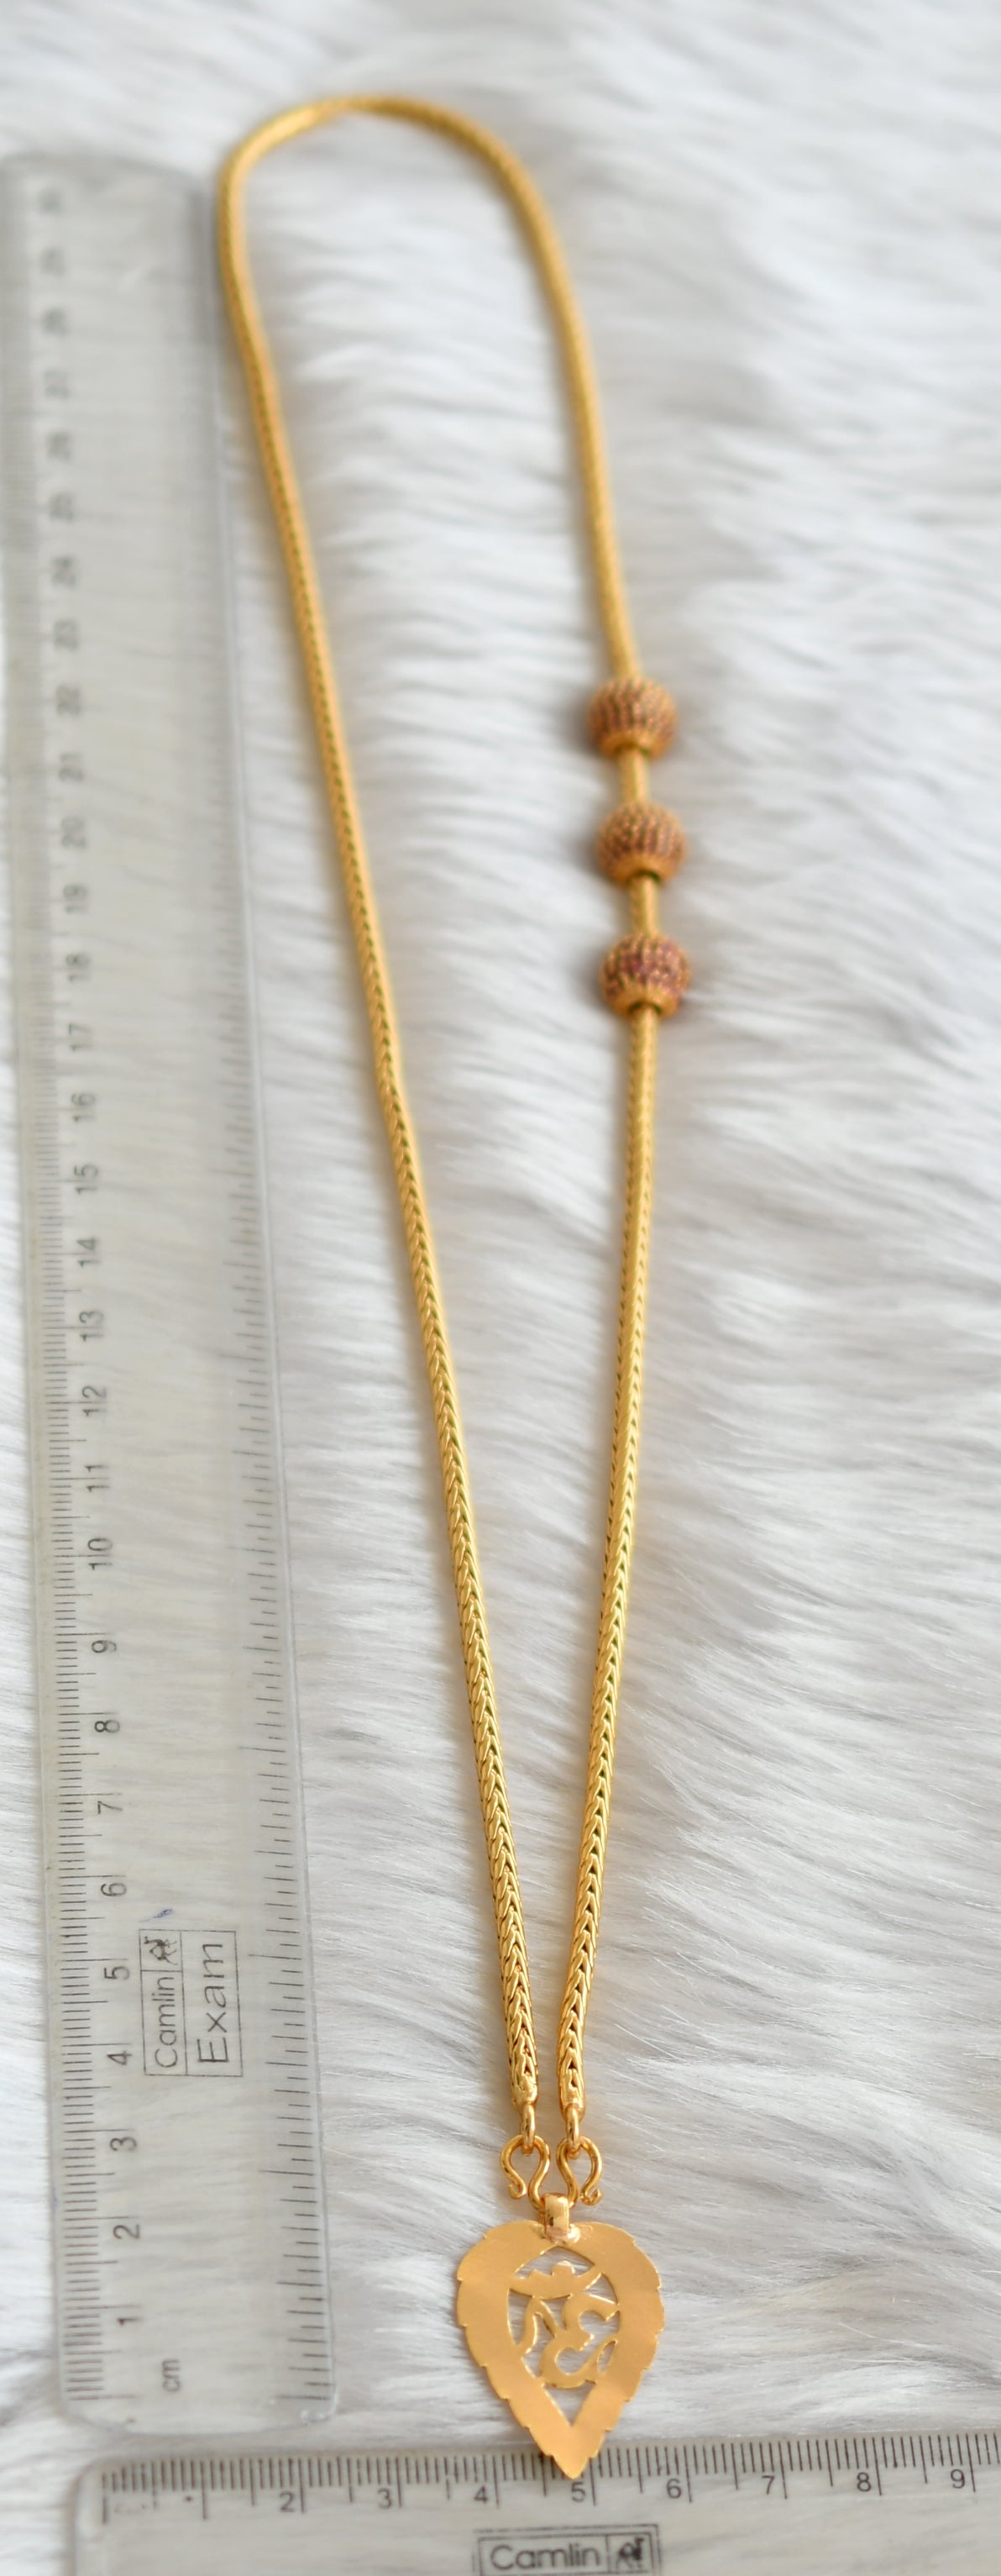 Gold tone ruby om pendant with mugappu chain dj-39635